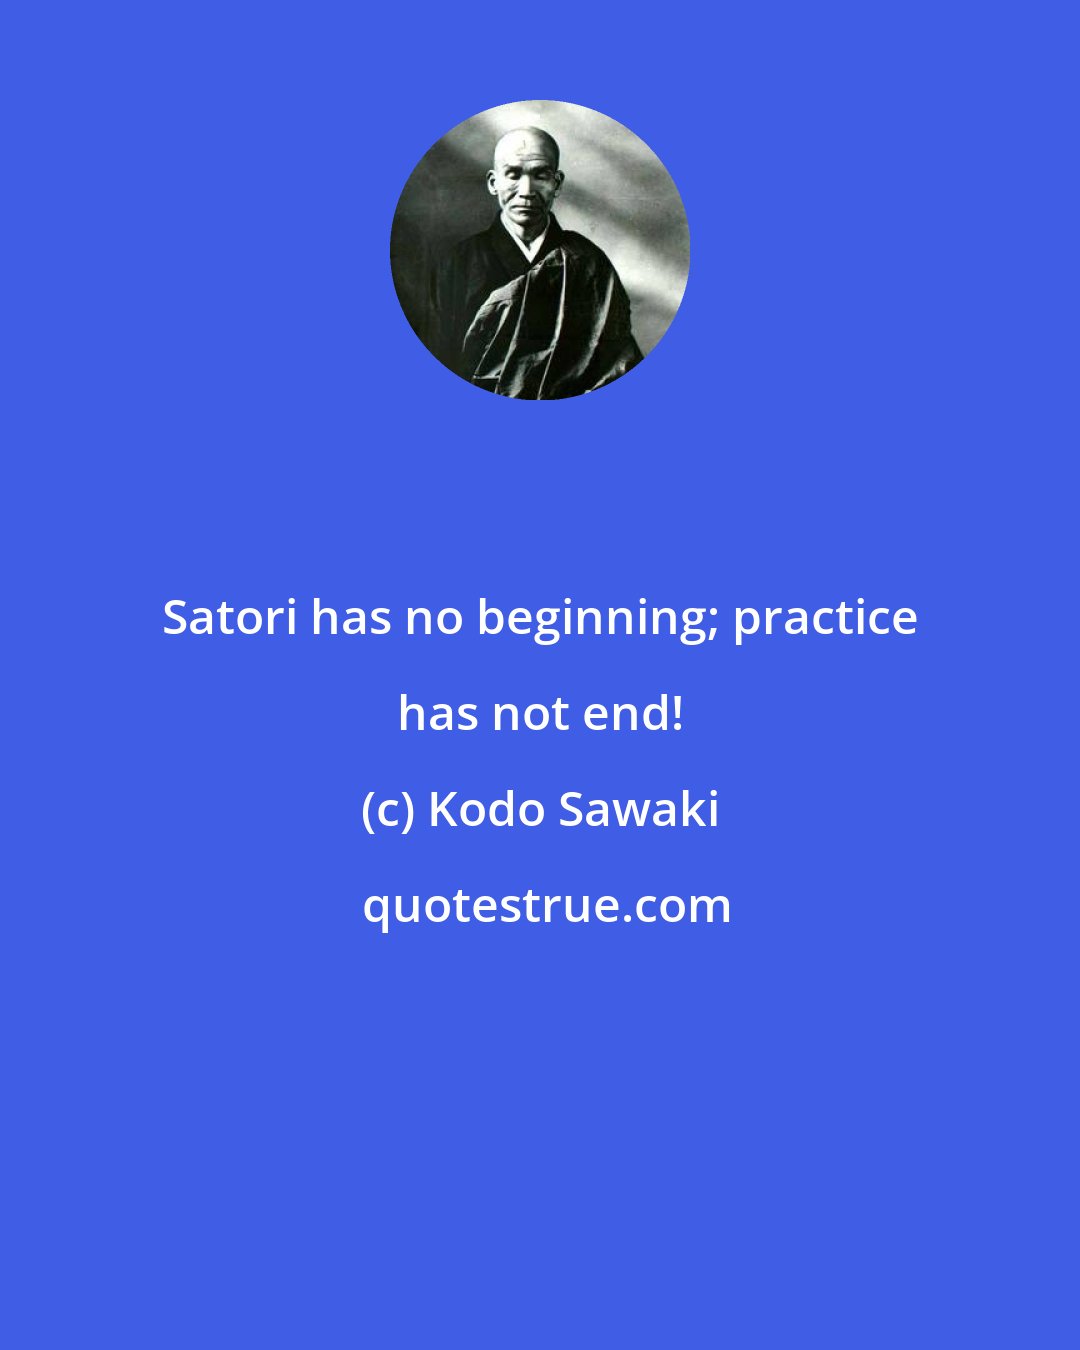 Kodo Sawaki: Satori has no beginning; practice has not end!